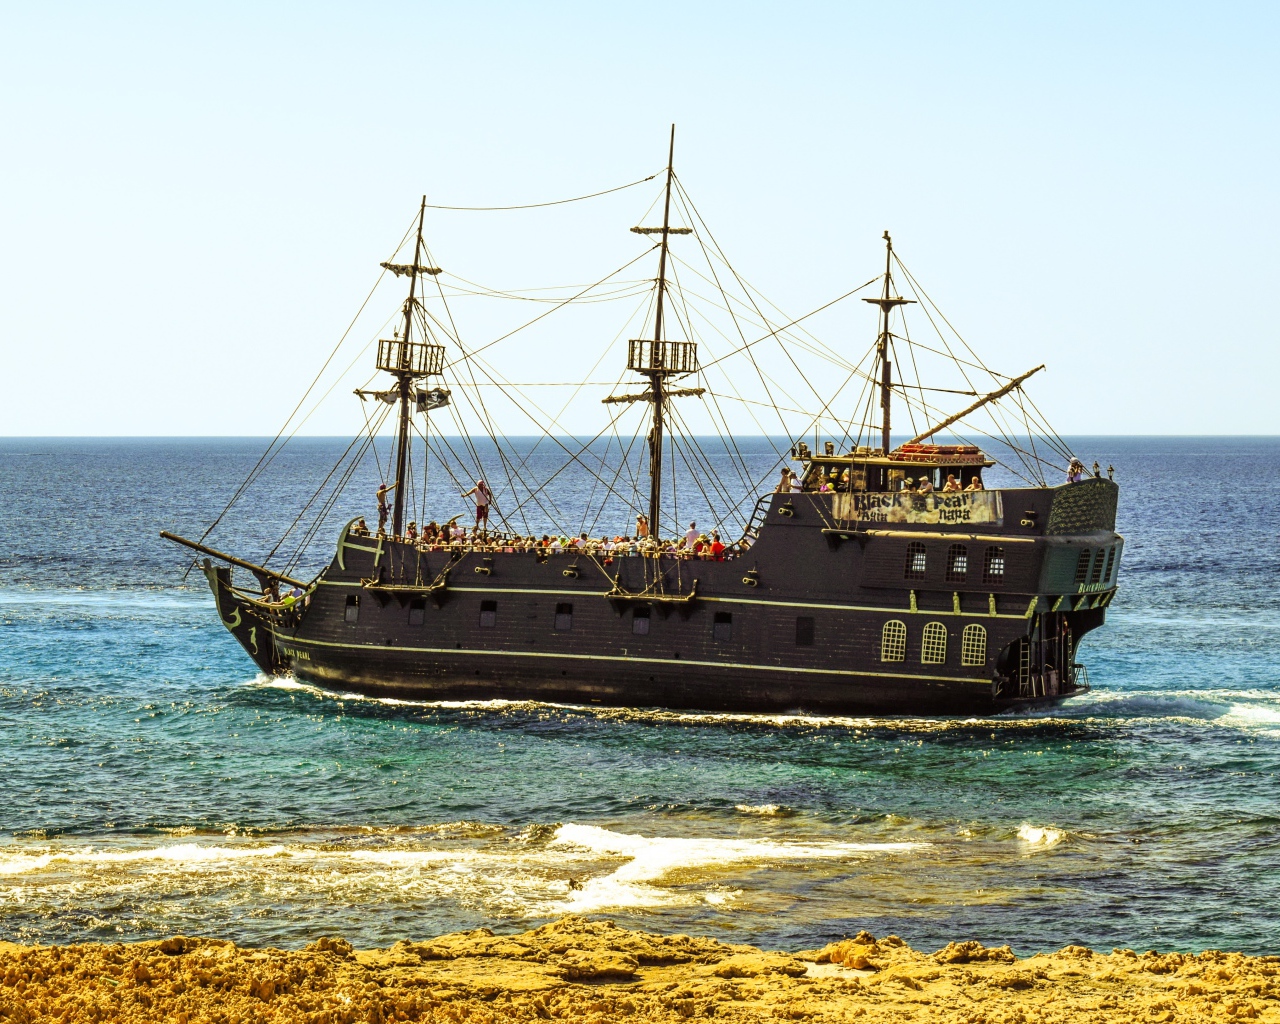 Big black pirate ship off the coast